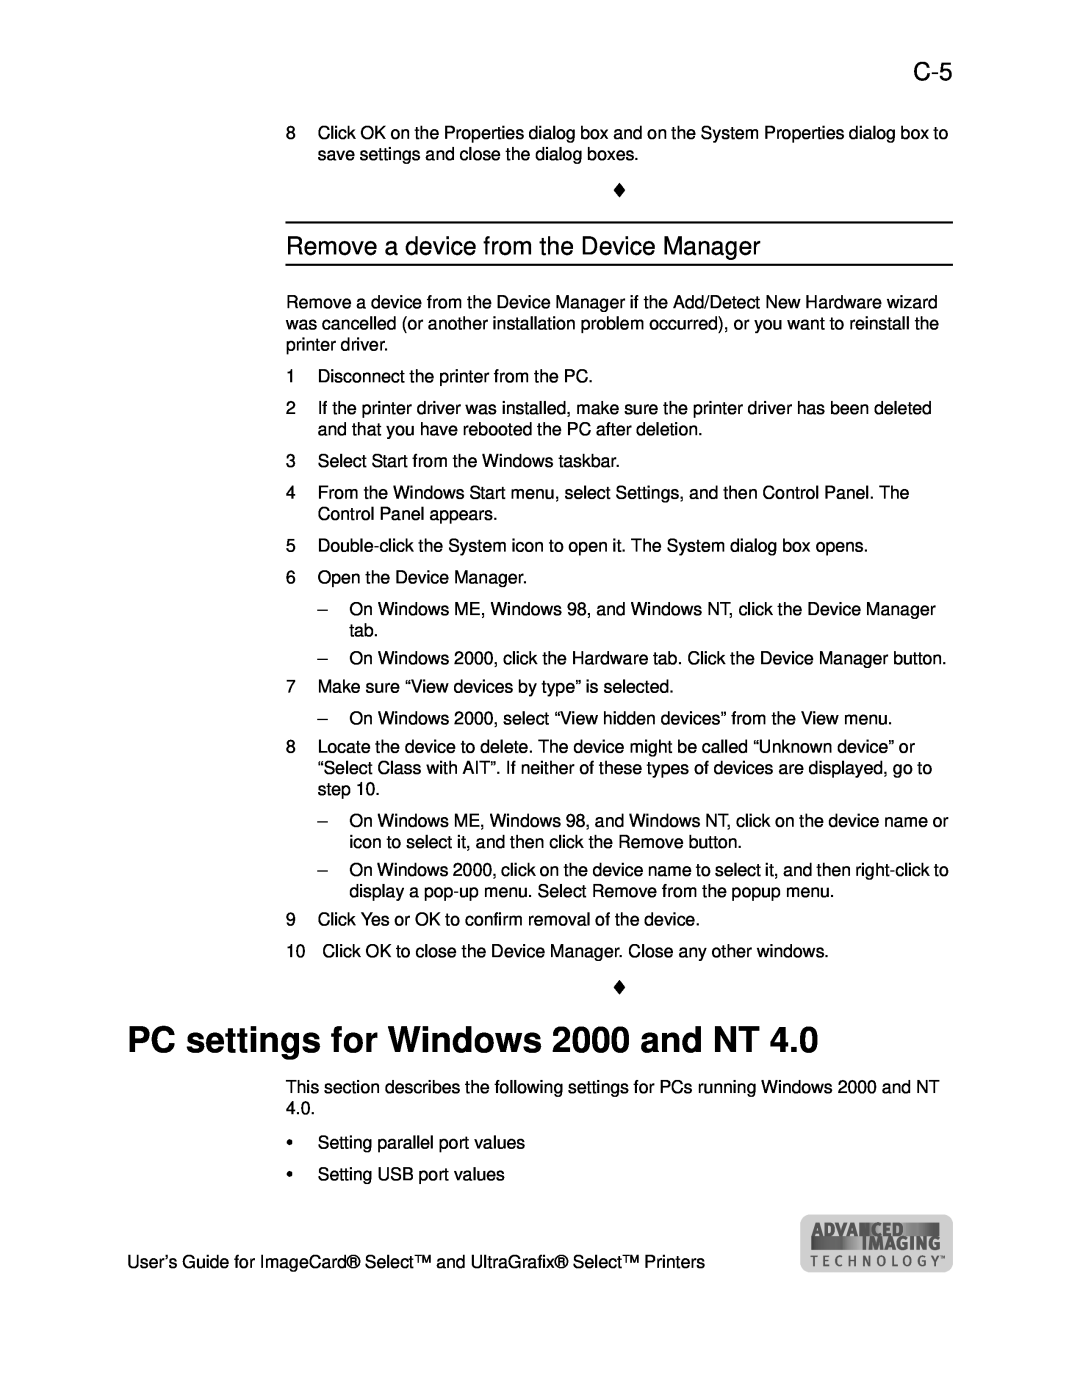 Datacard Group ImageCard SelectTM and UltraGrafix SelectTM Printers manual PC settings for Windows 2000 and NT 